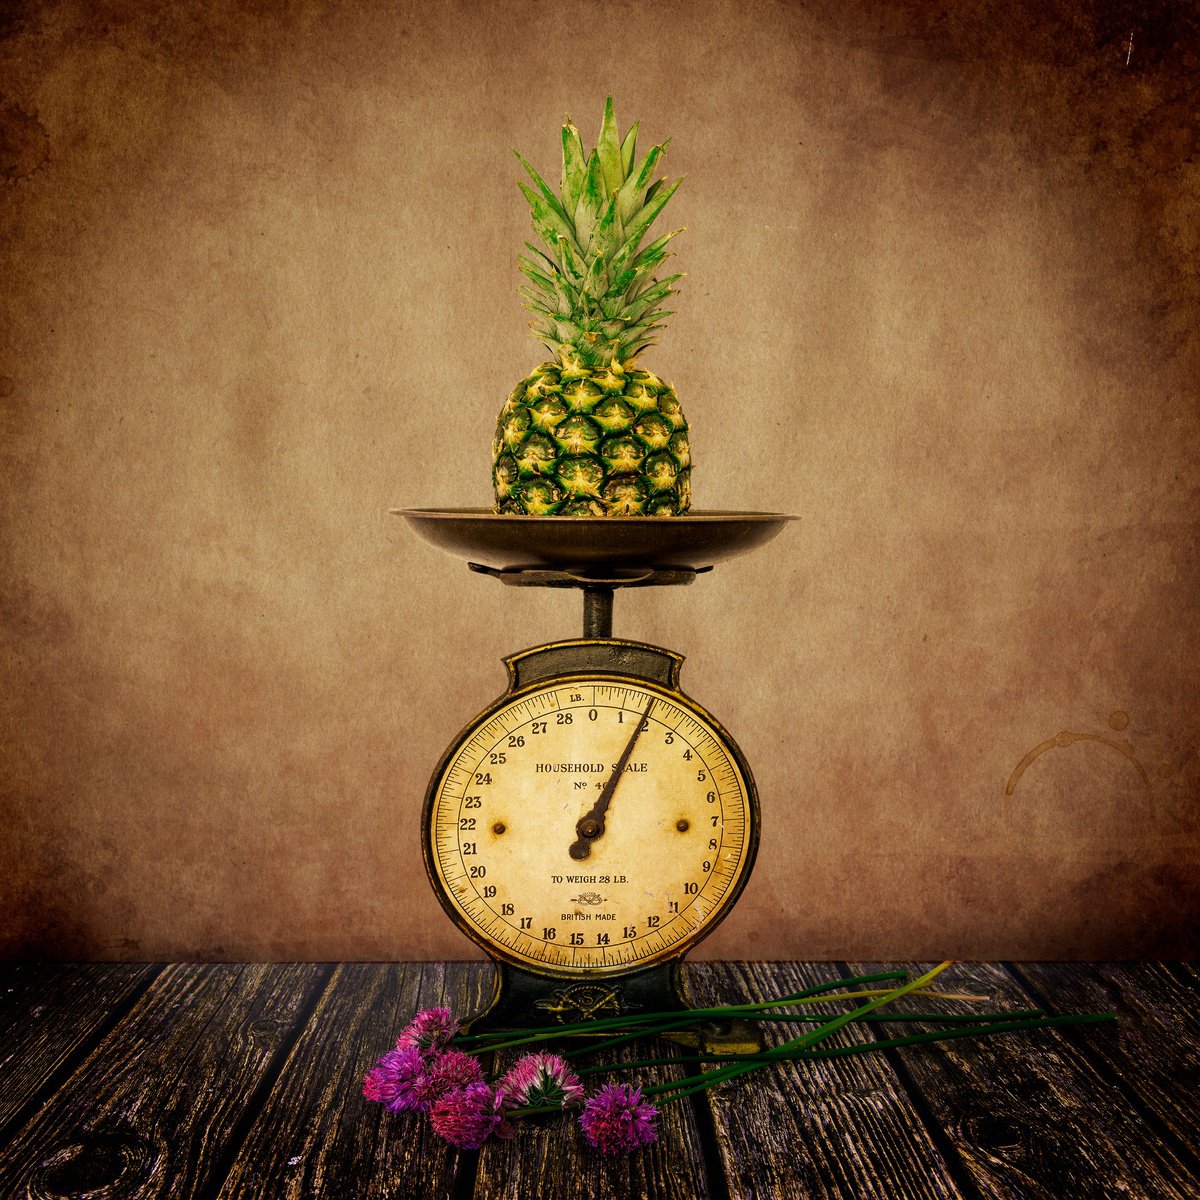 ’Pineapple’ - Still Life Photography by Michael McHugh